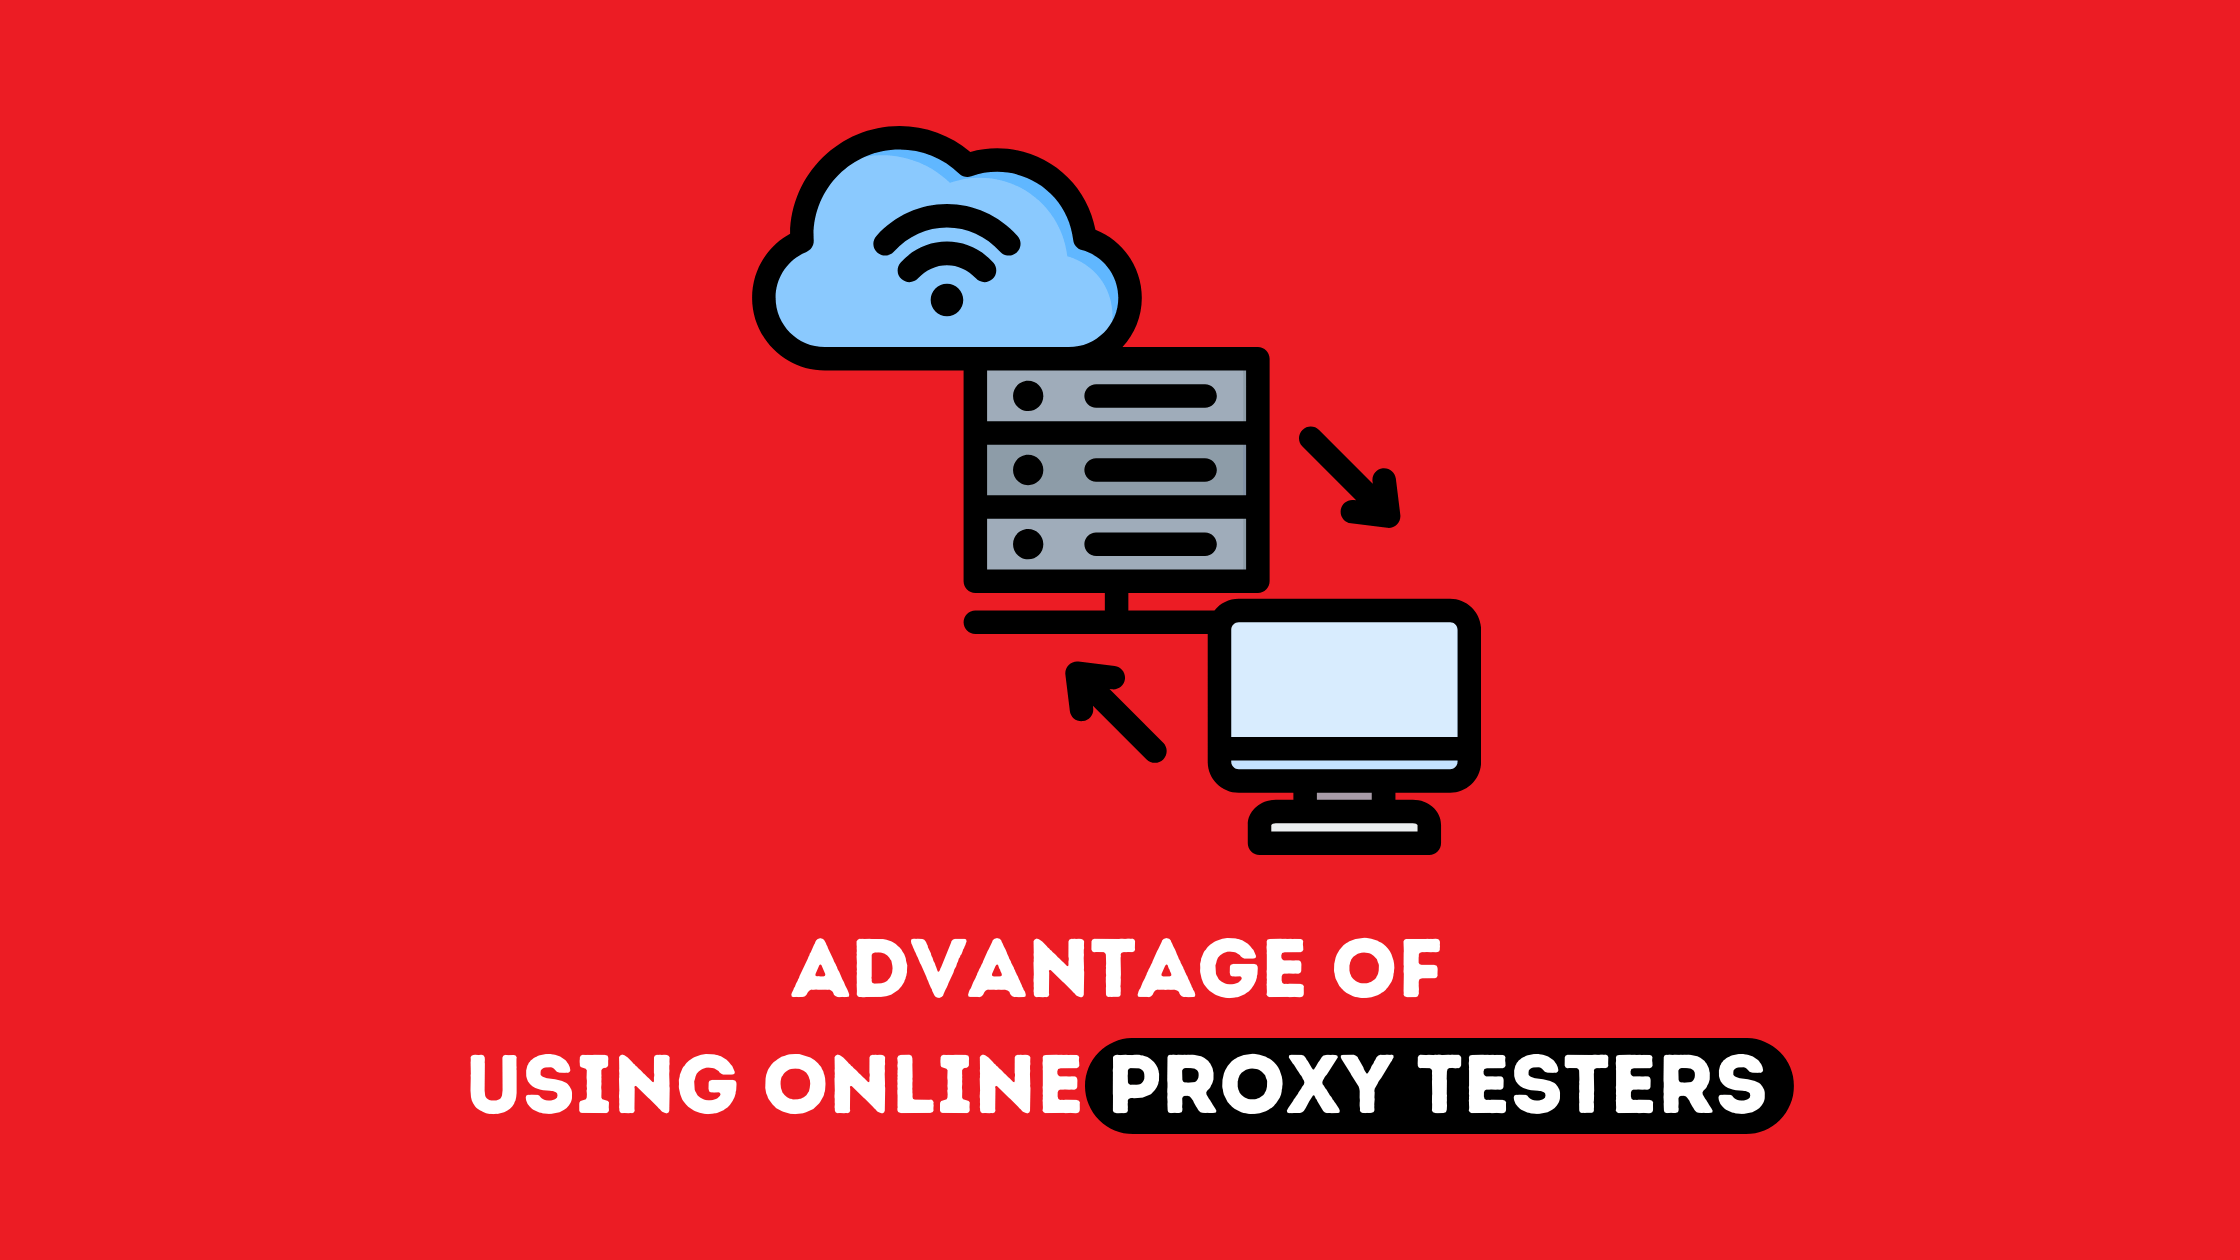 Online Proxy Testers